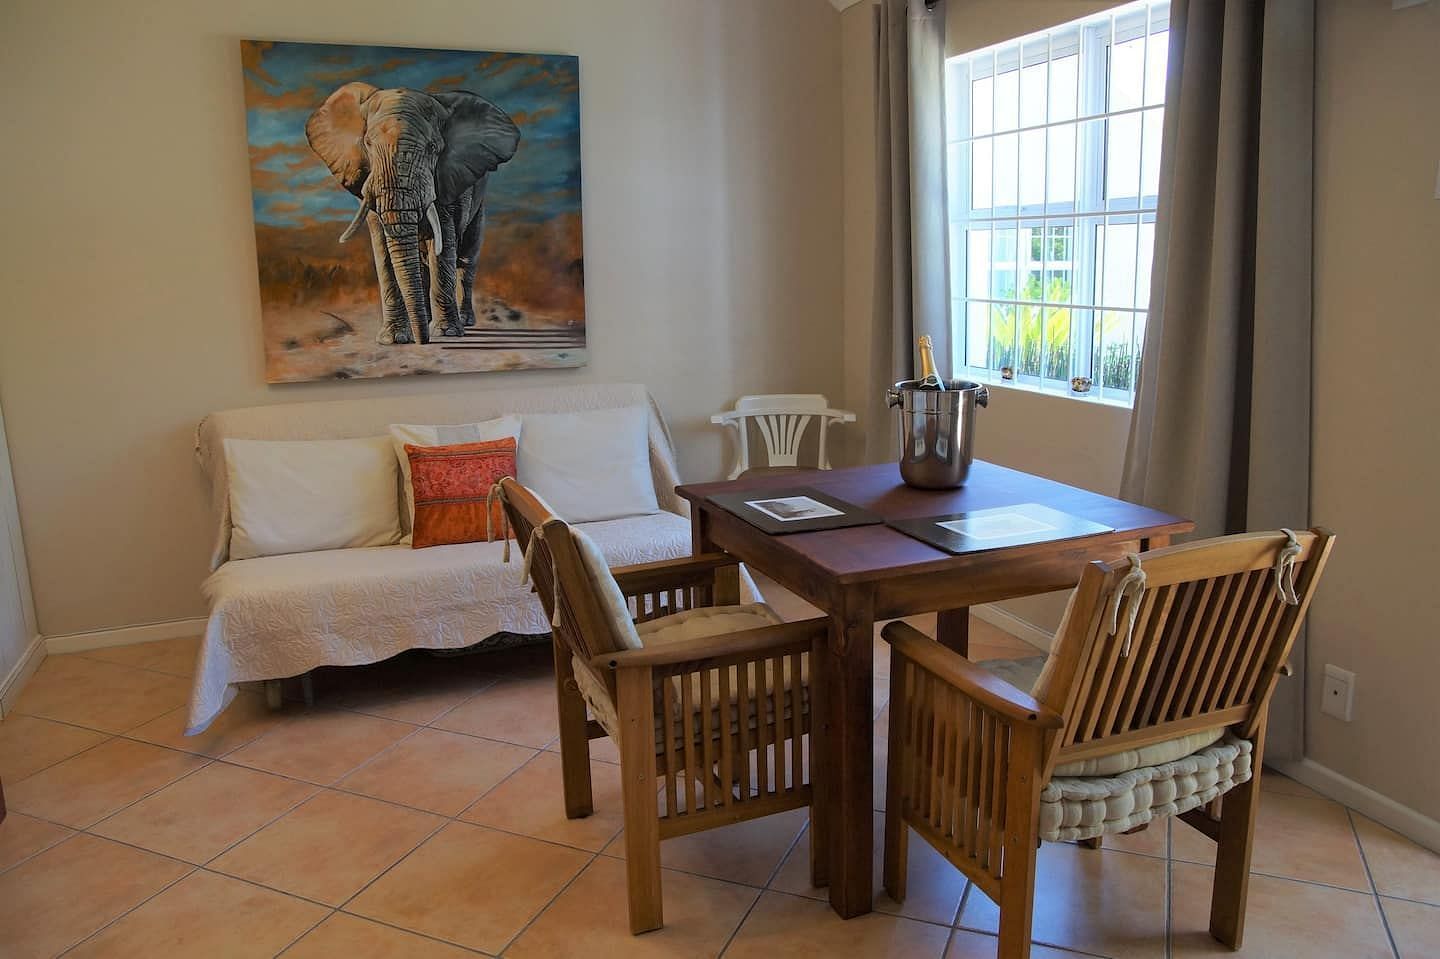 JWguest Residential Home at Cape Town, Western Cape | Wonderful Studio Apartment between 2 Oceans #1 | Jwbnb no brobnb 6